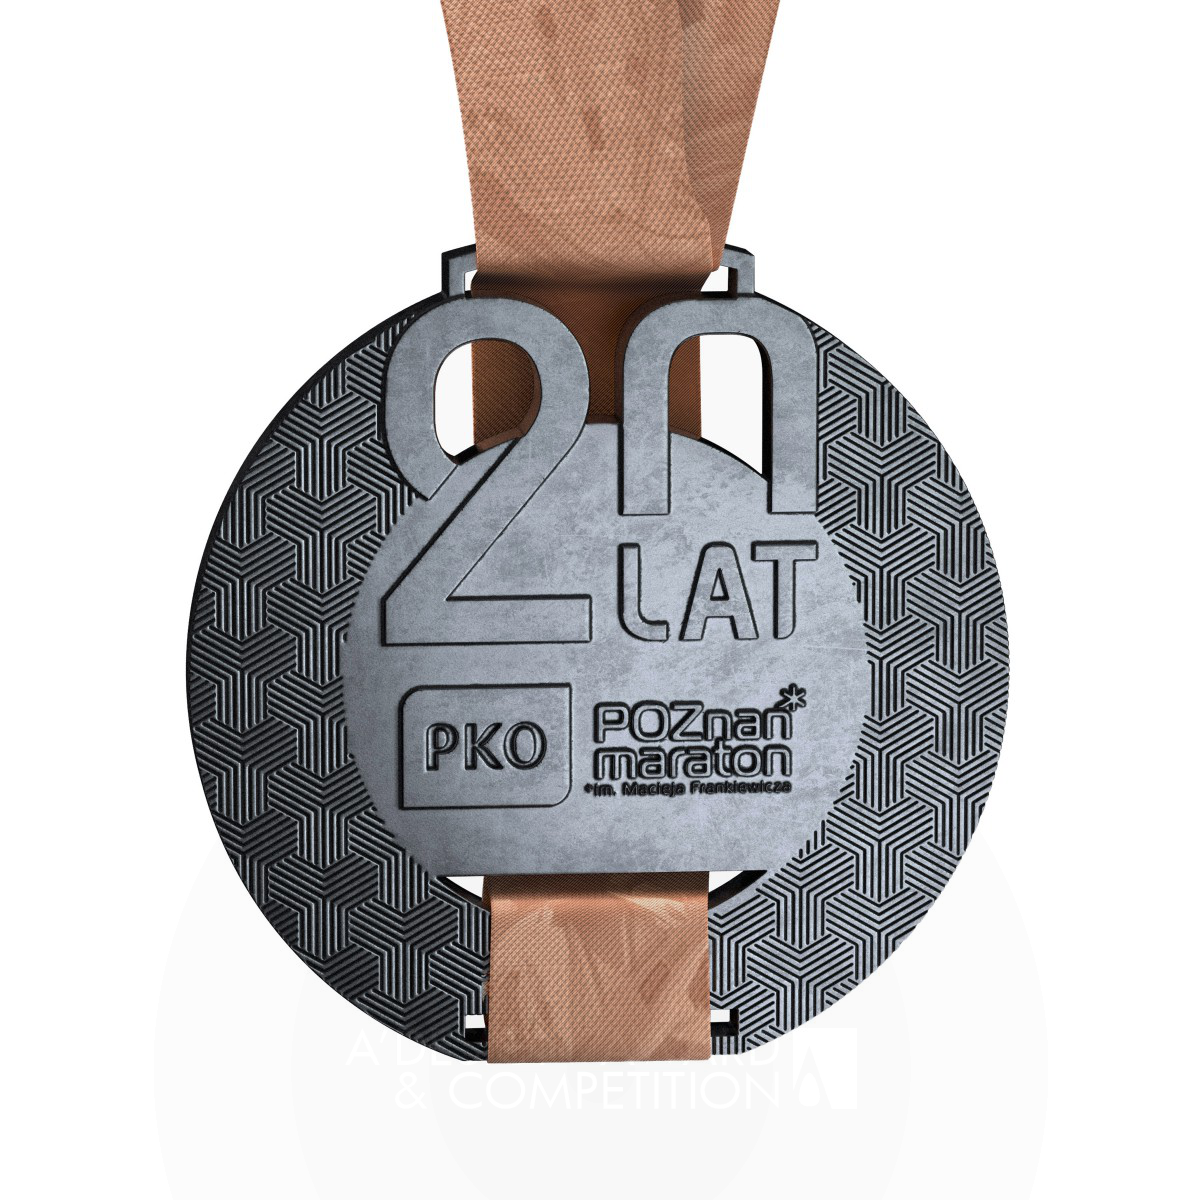 Poznan Marathon Medal Presentation